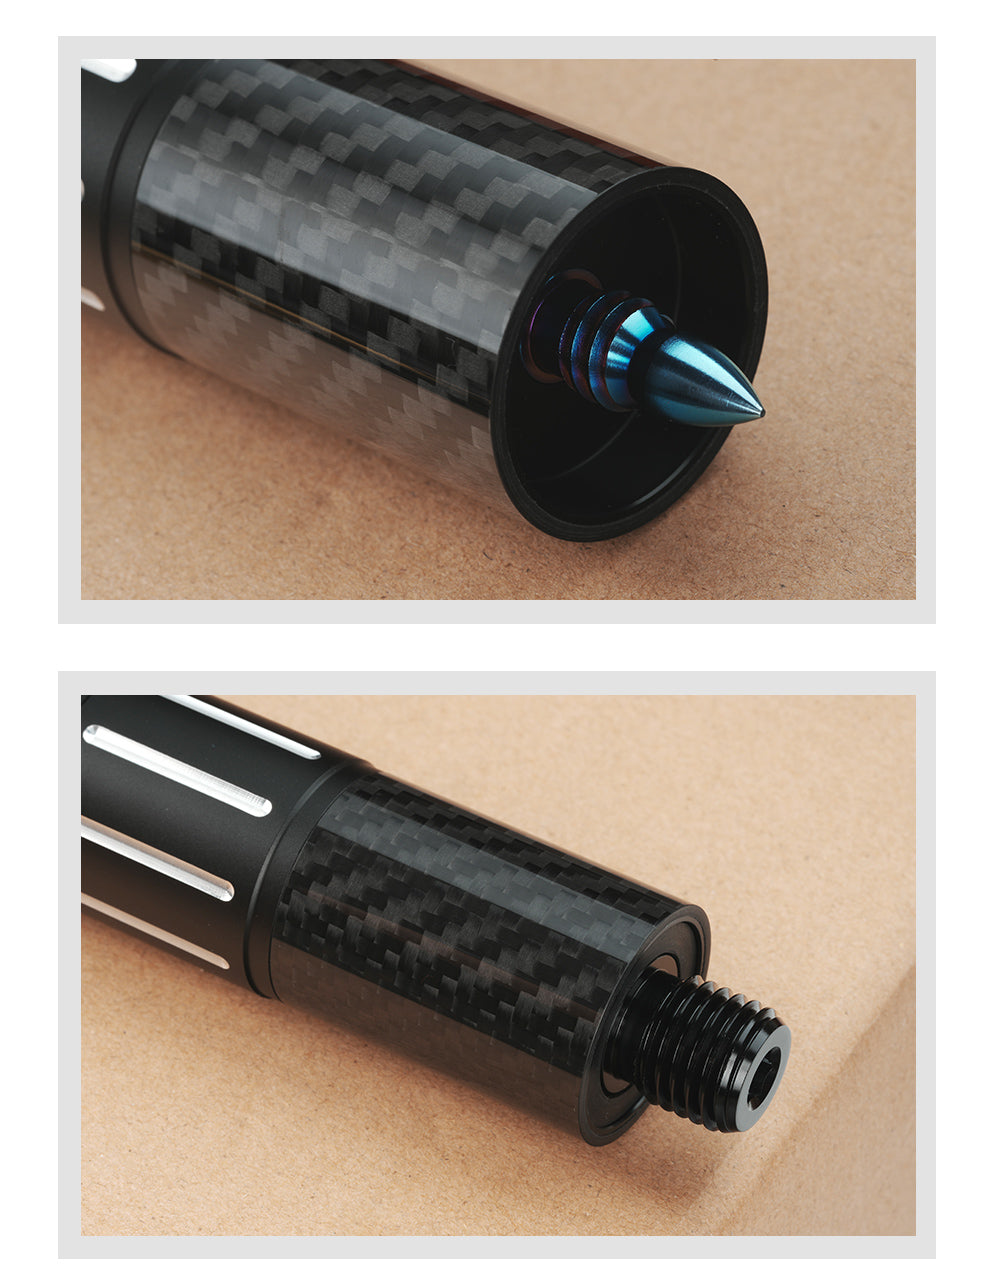 Billard Extendable Extension 1 pcs Black Carbon Fiber Aluminum Alloy for MEZZ/ZOKUE/FURY/PREDAIOR